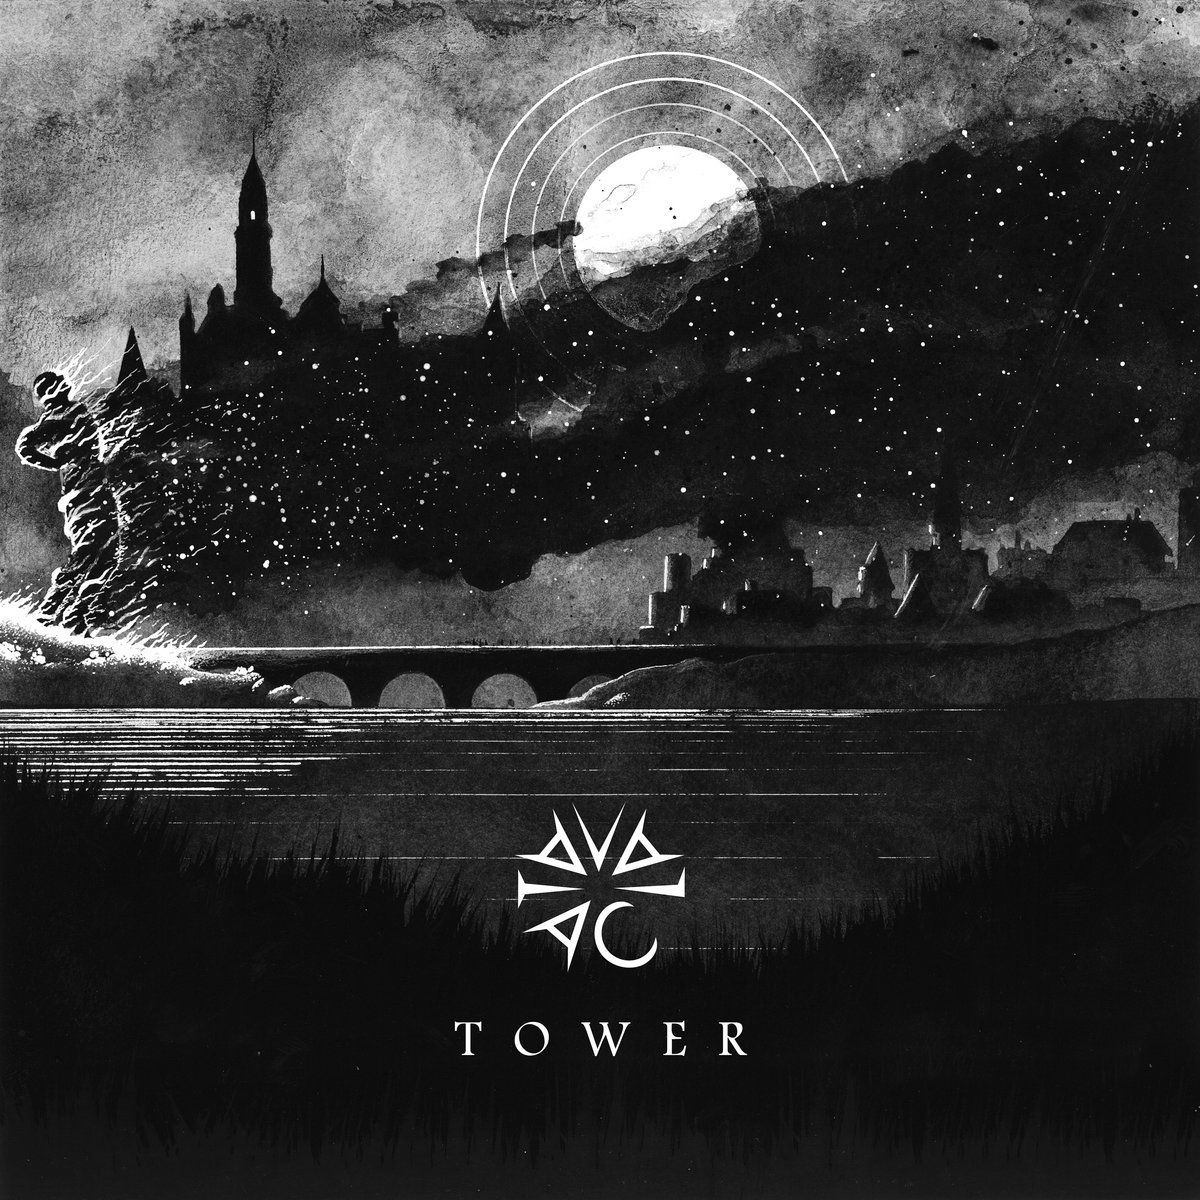 Valcata - Tower (single 2021)